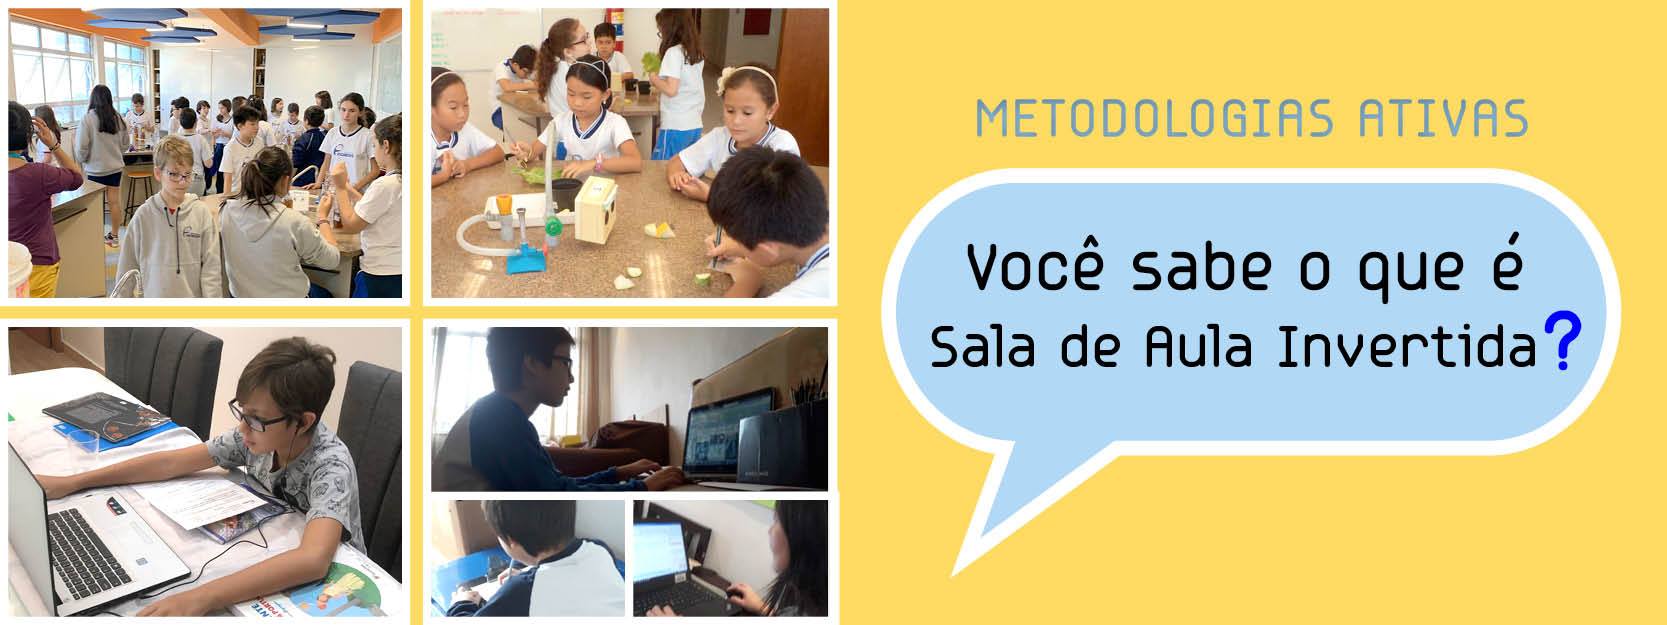 Especial Metodologias Ativas: sala de aula invertida - Centro Educacional  Pioneiro